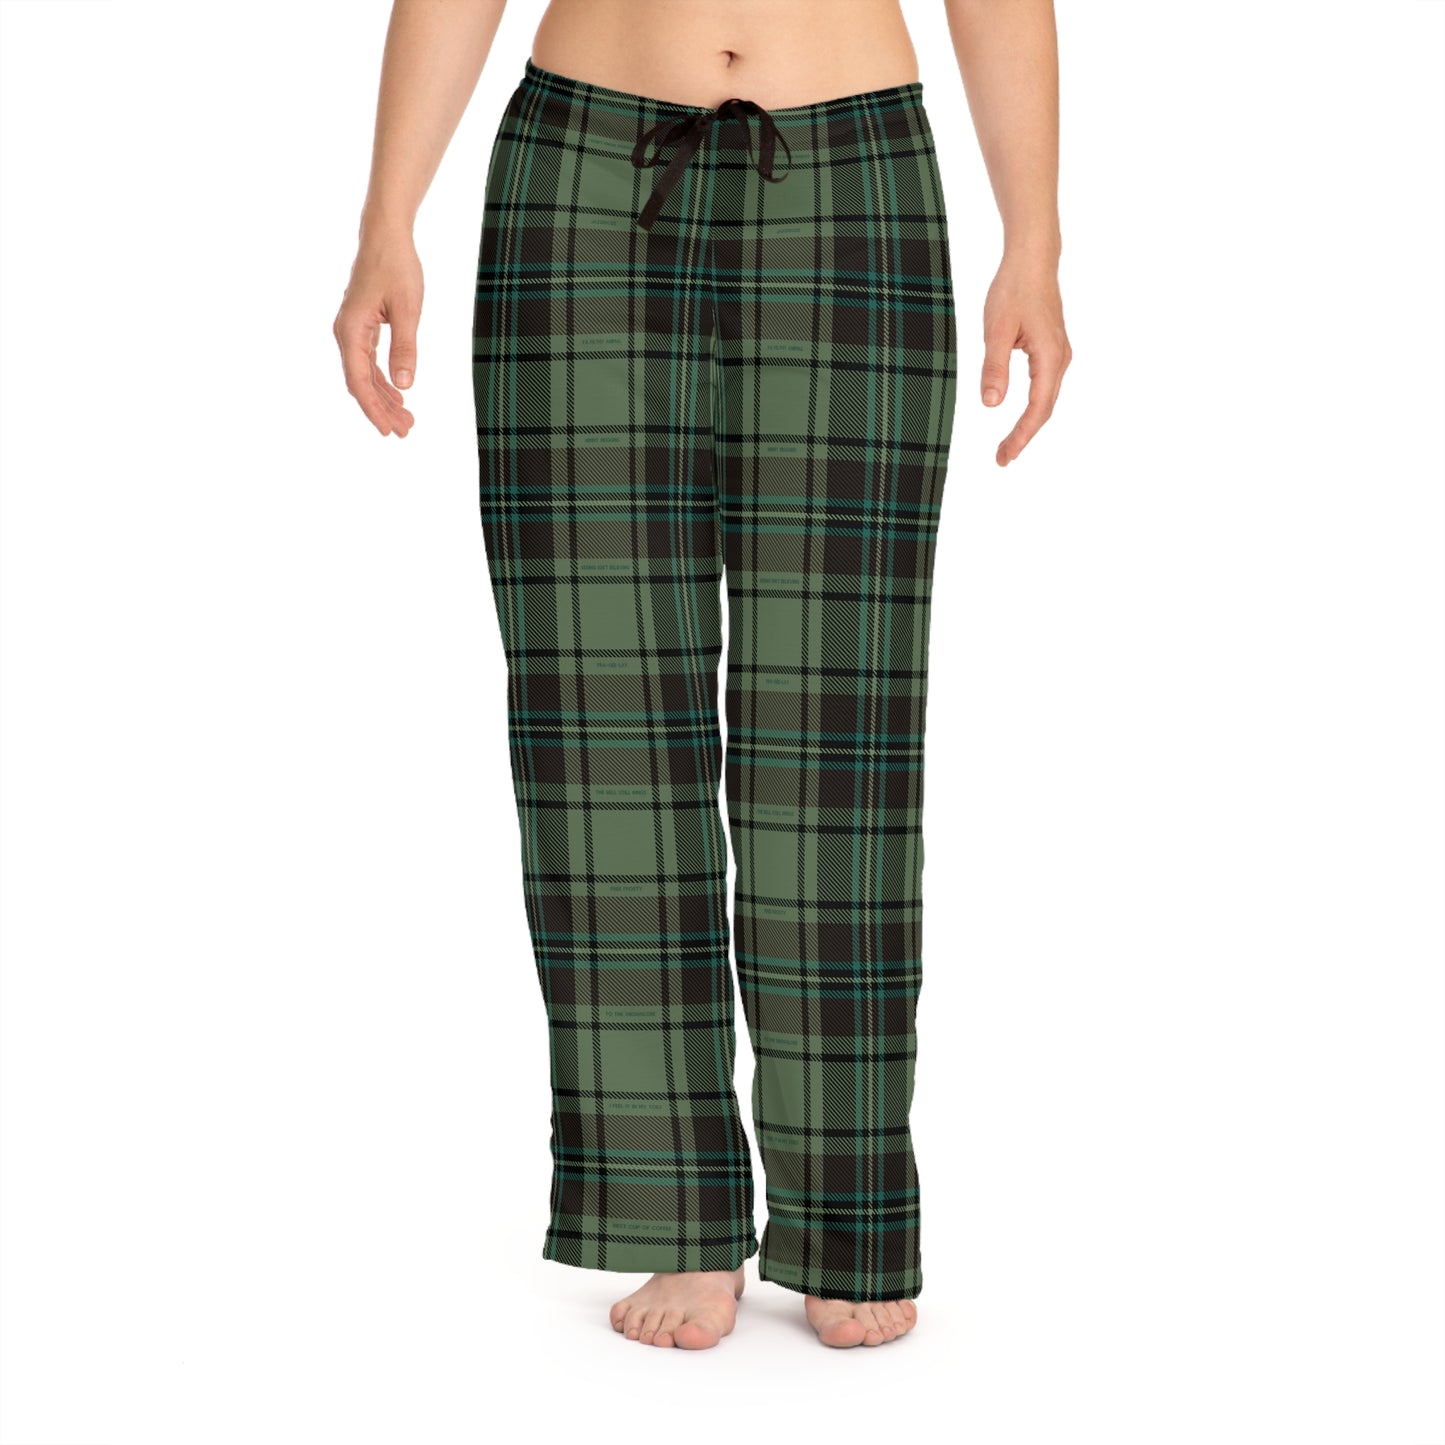 Small Town Plaid - Women's Pajama Pants